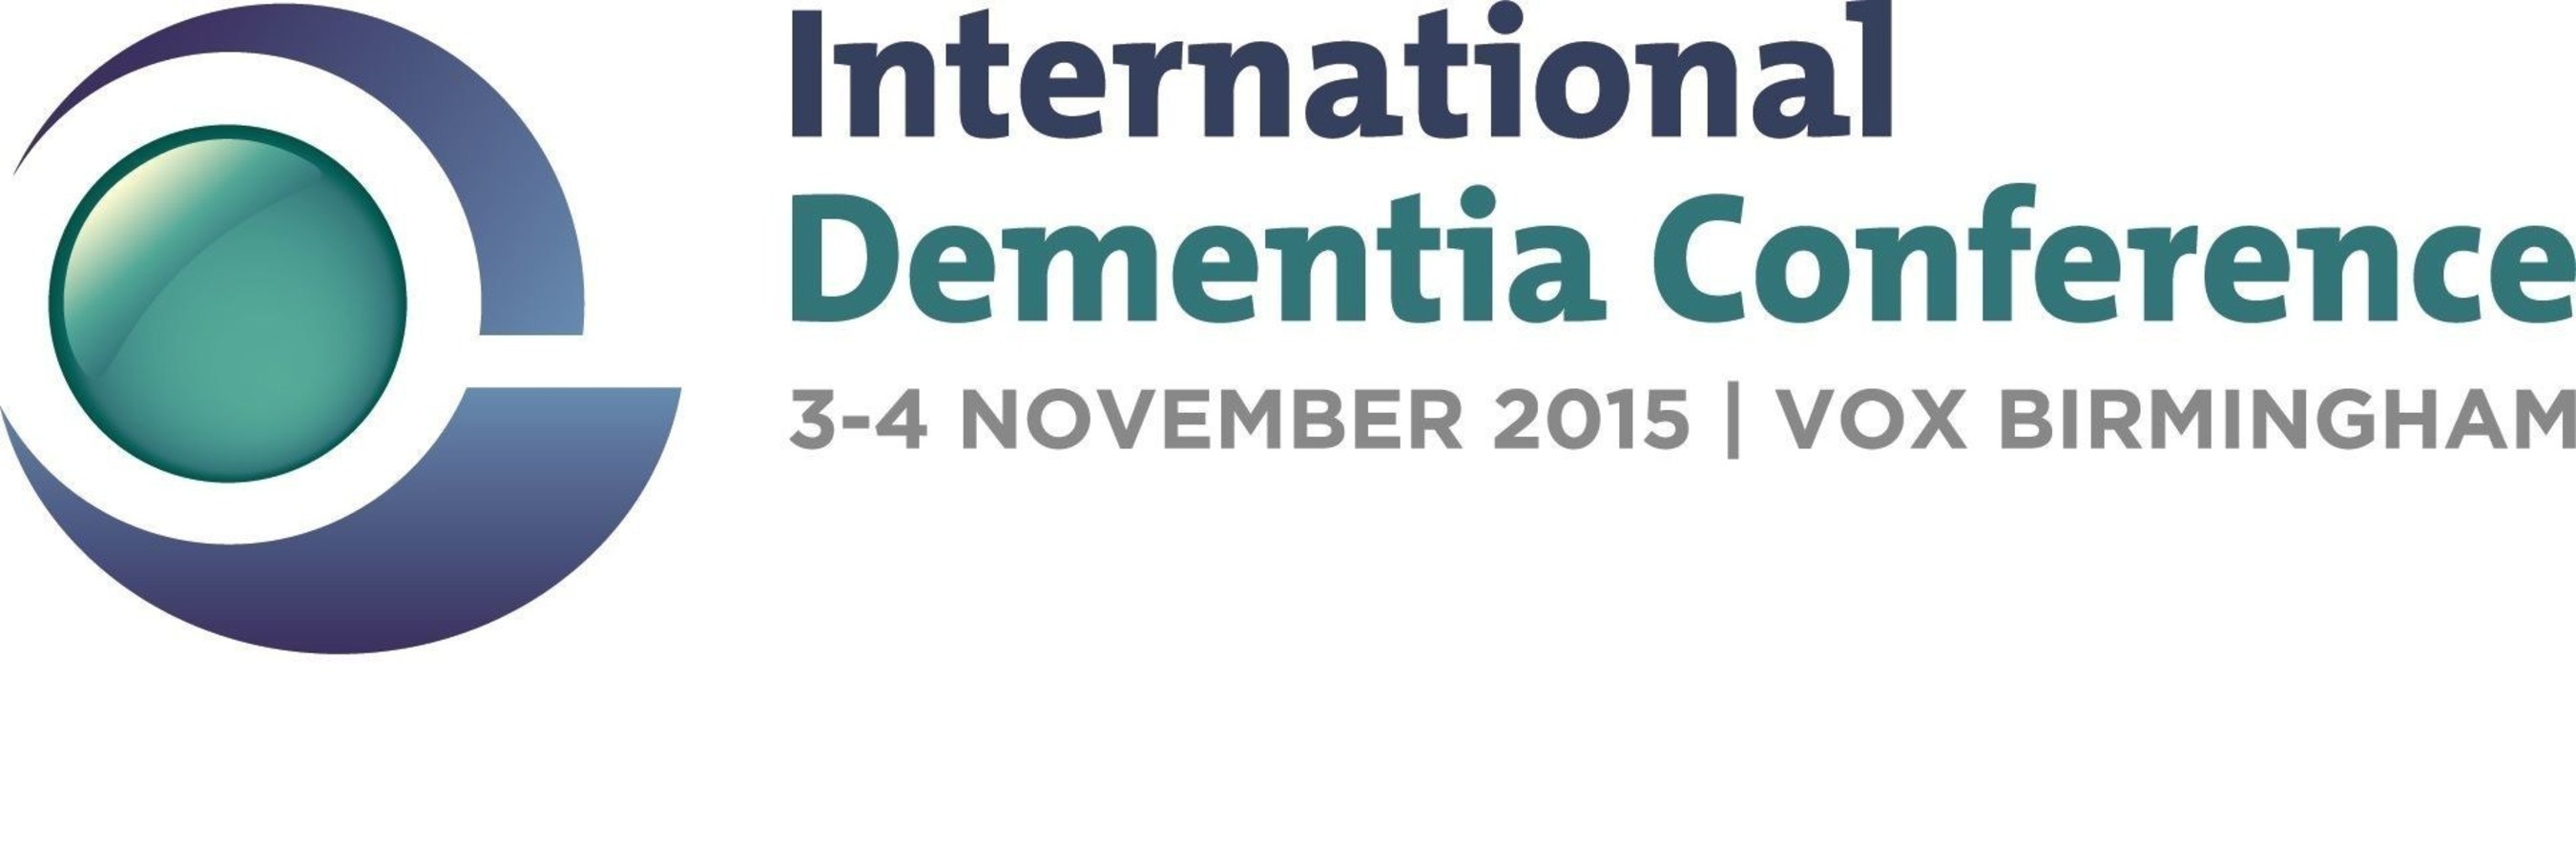 International Dementia Conference (PRNewsFoto/Care and Dementia Show) (PRNewsFoto/Care and Dementia Show)